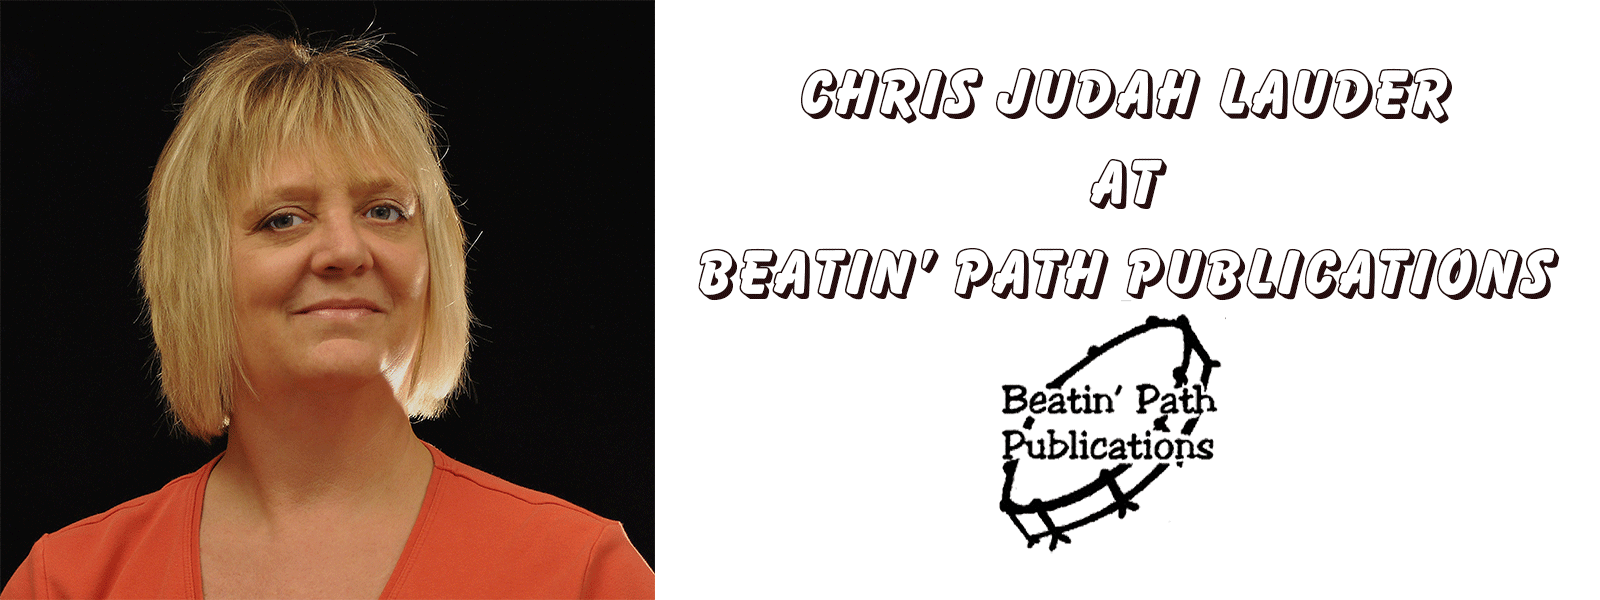 Chris Judah Lauder at Beatin' Path Publications